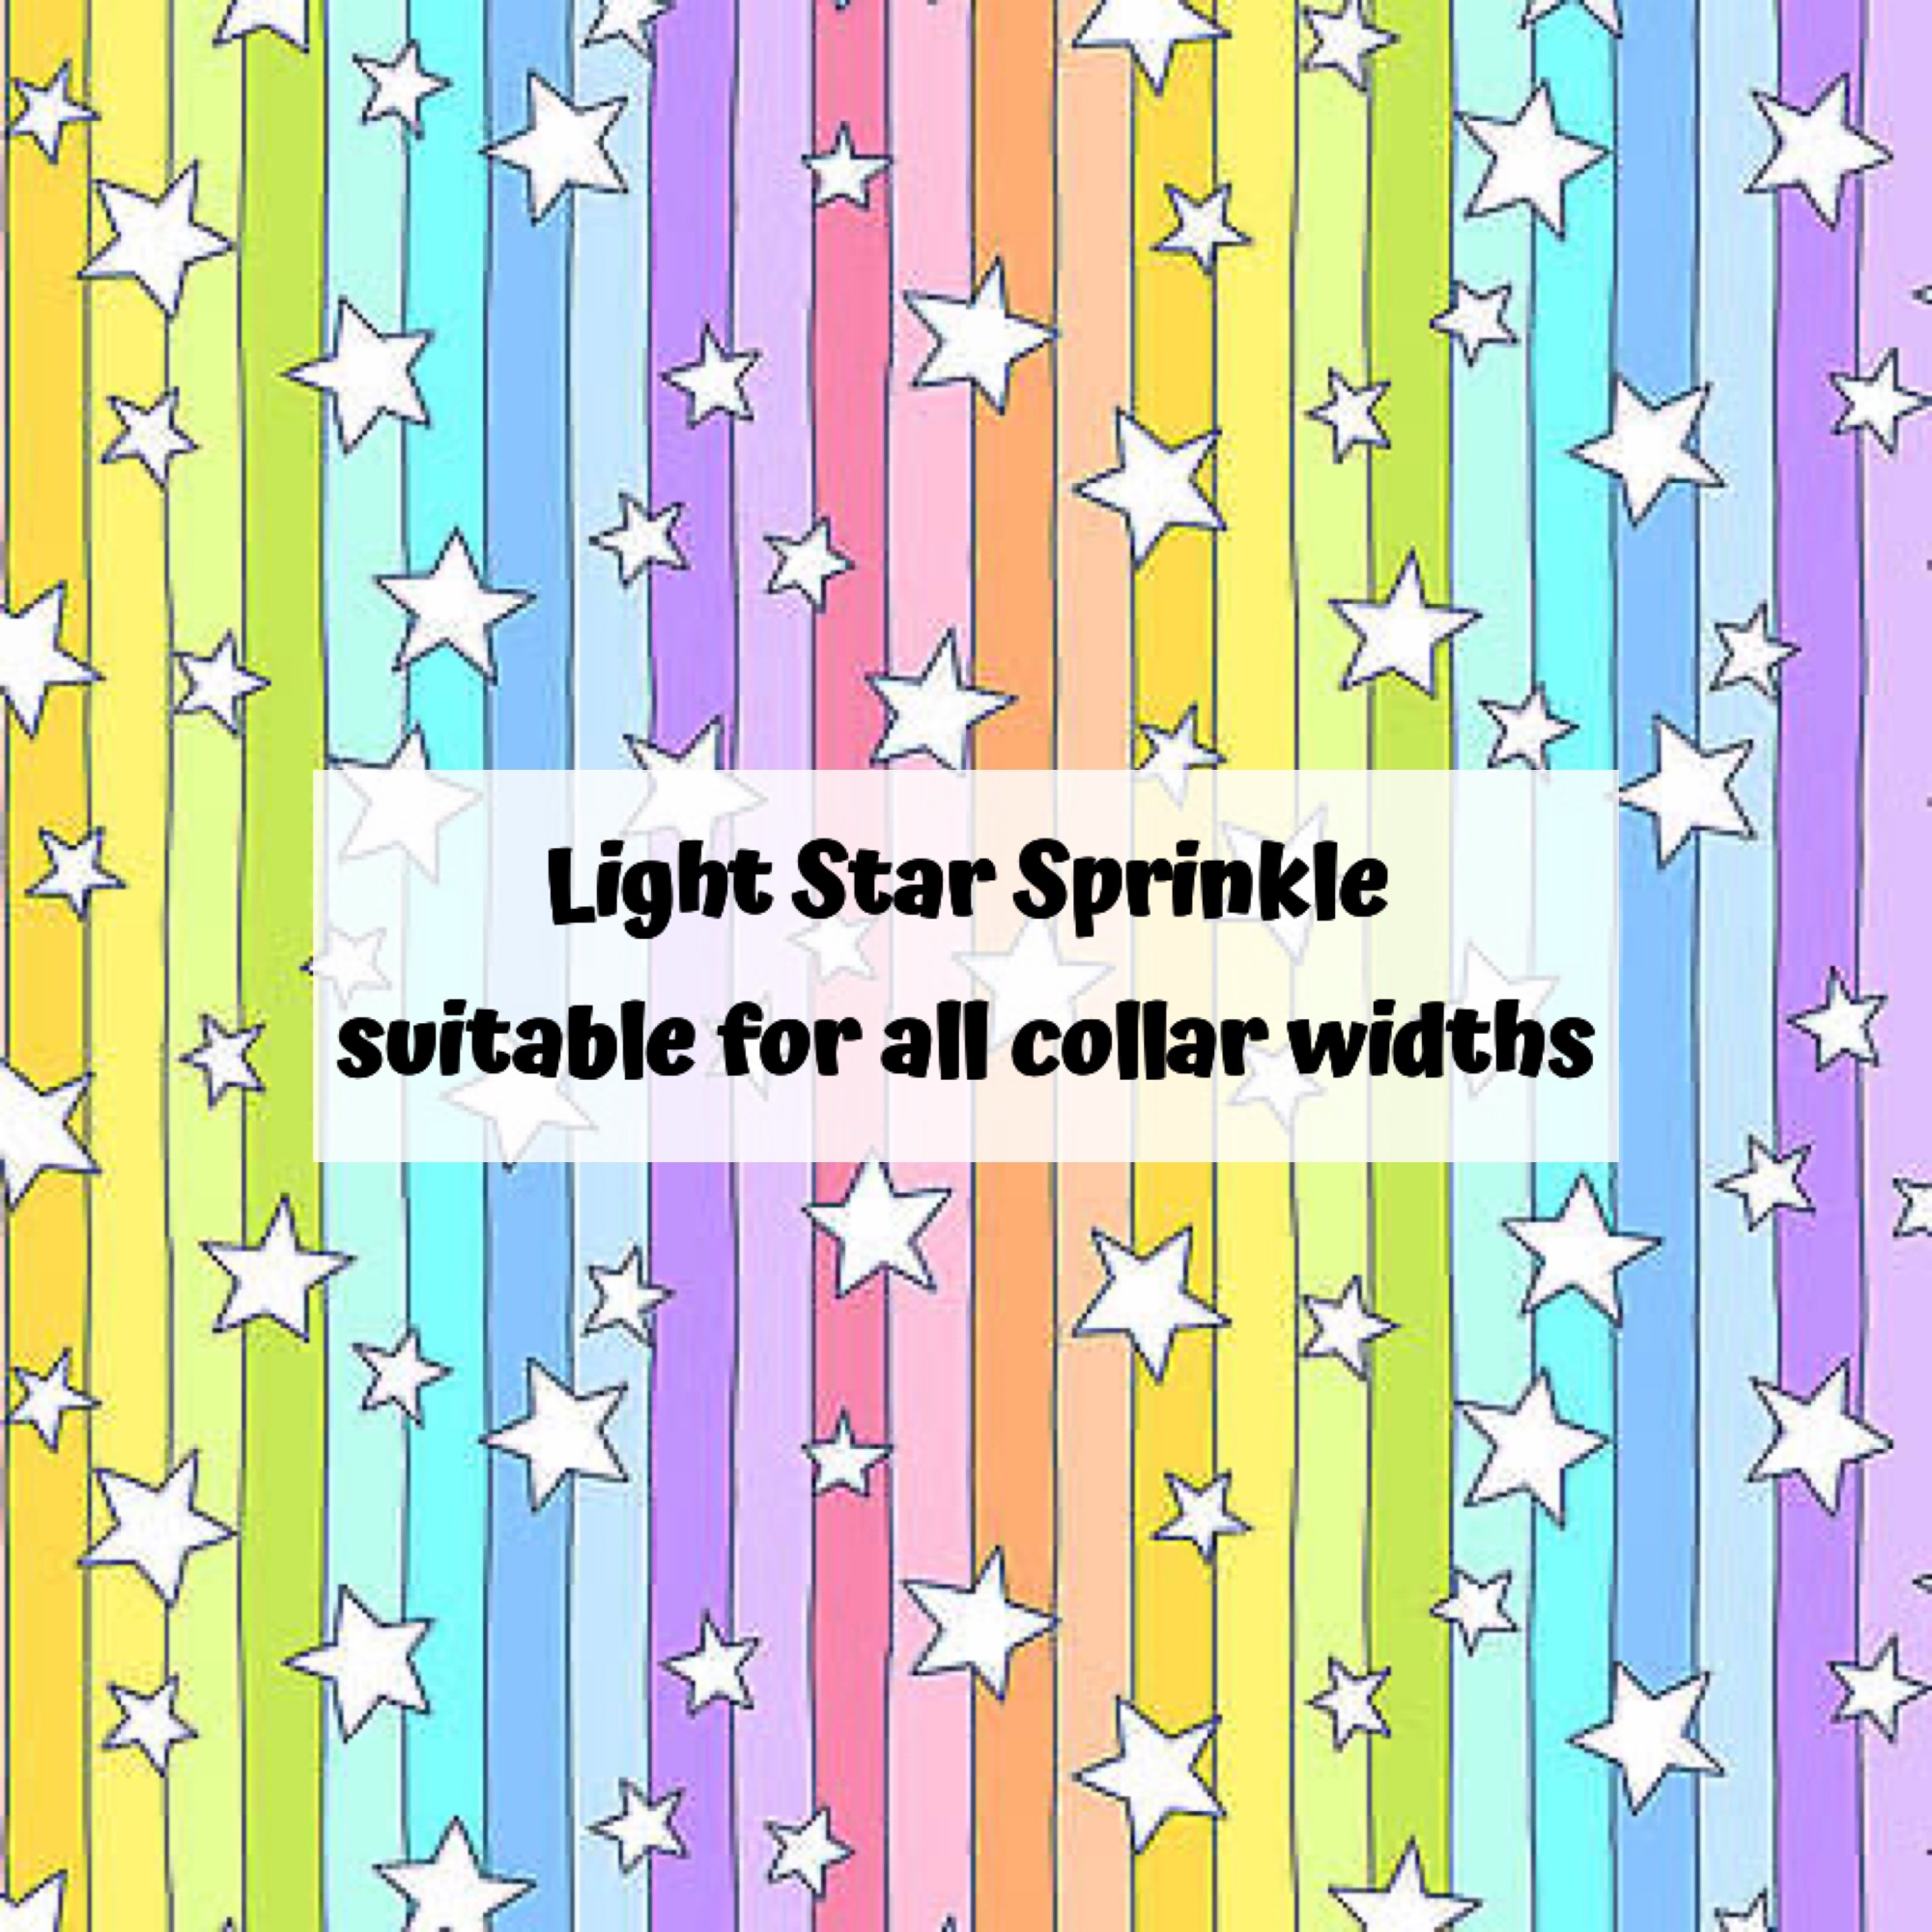 Light Star Sprinkle